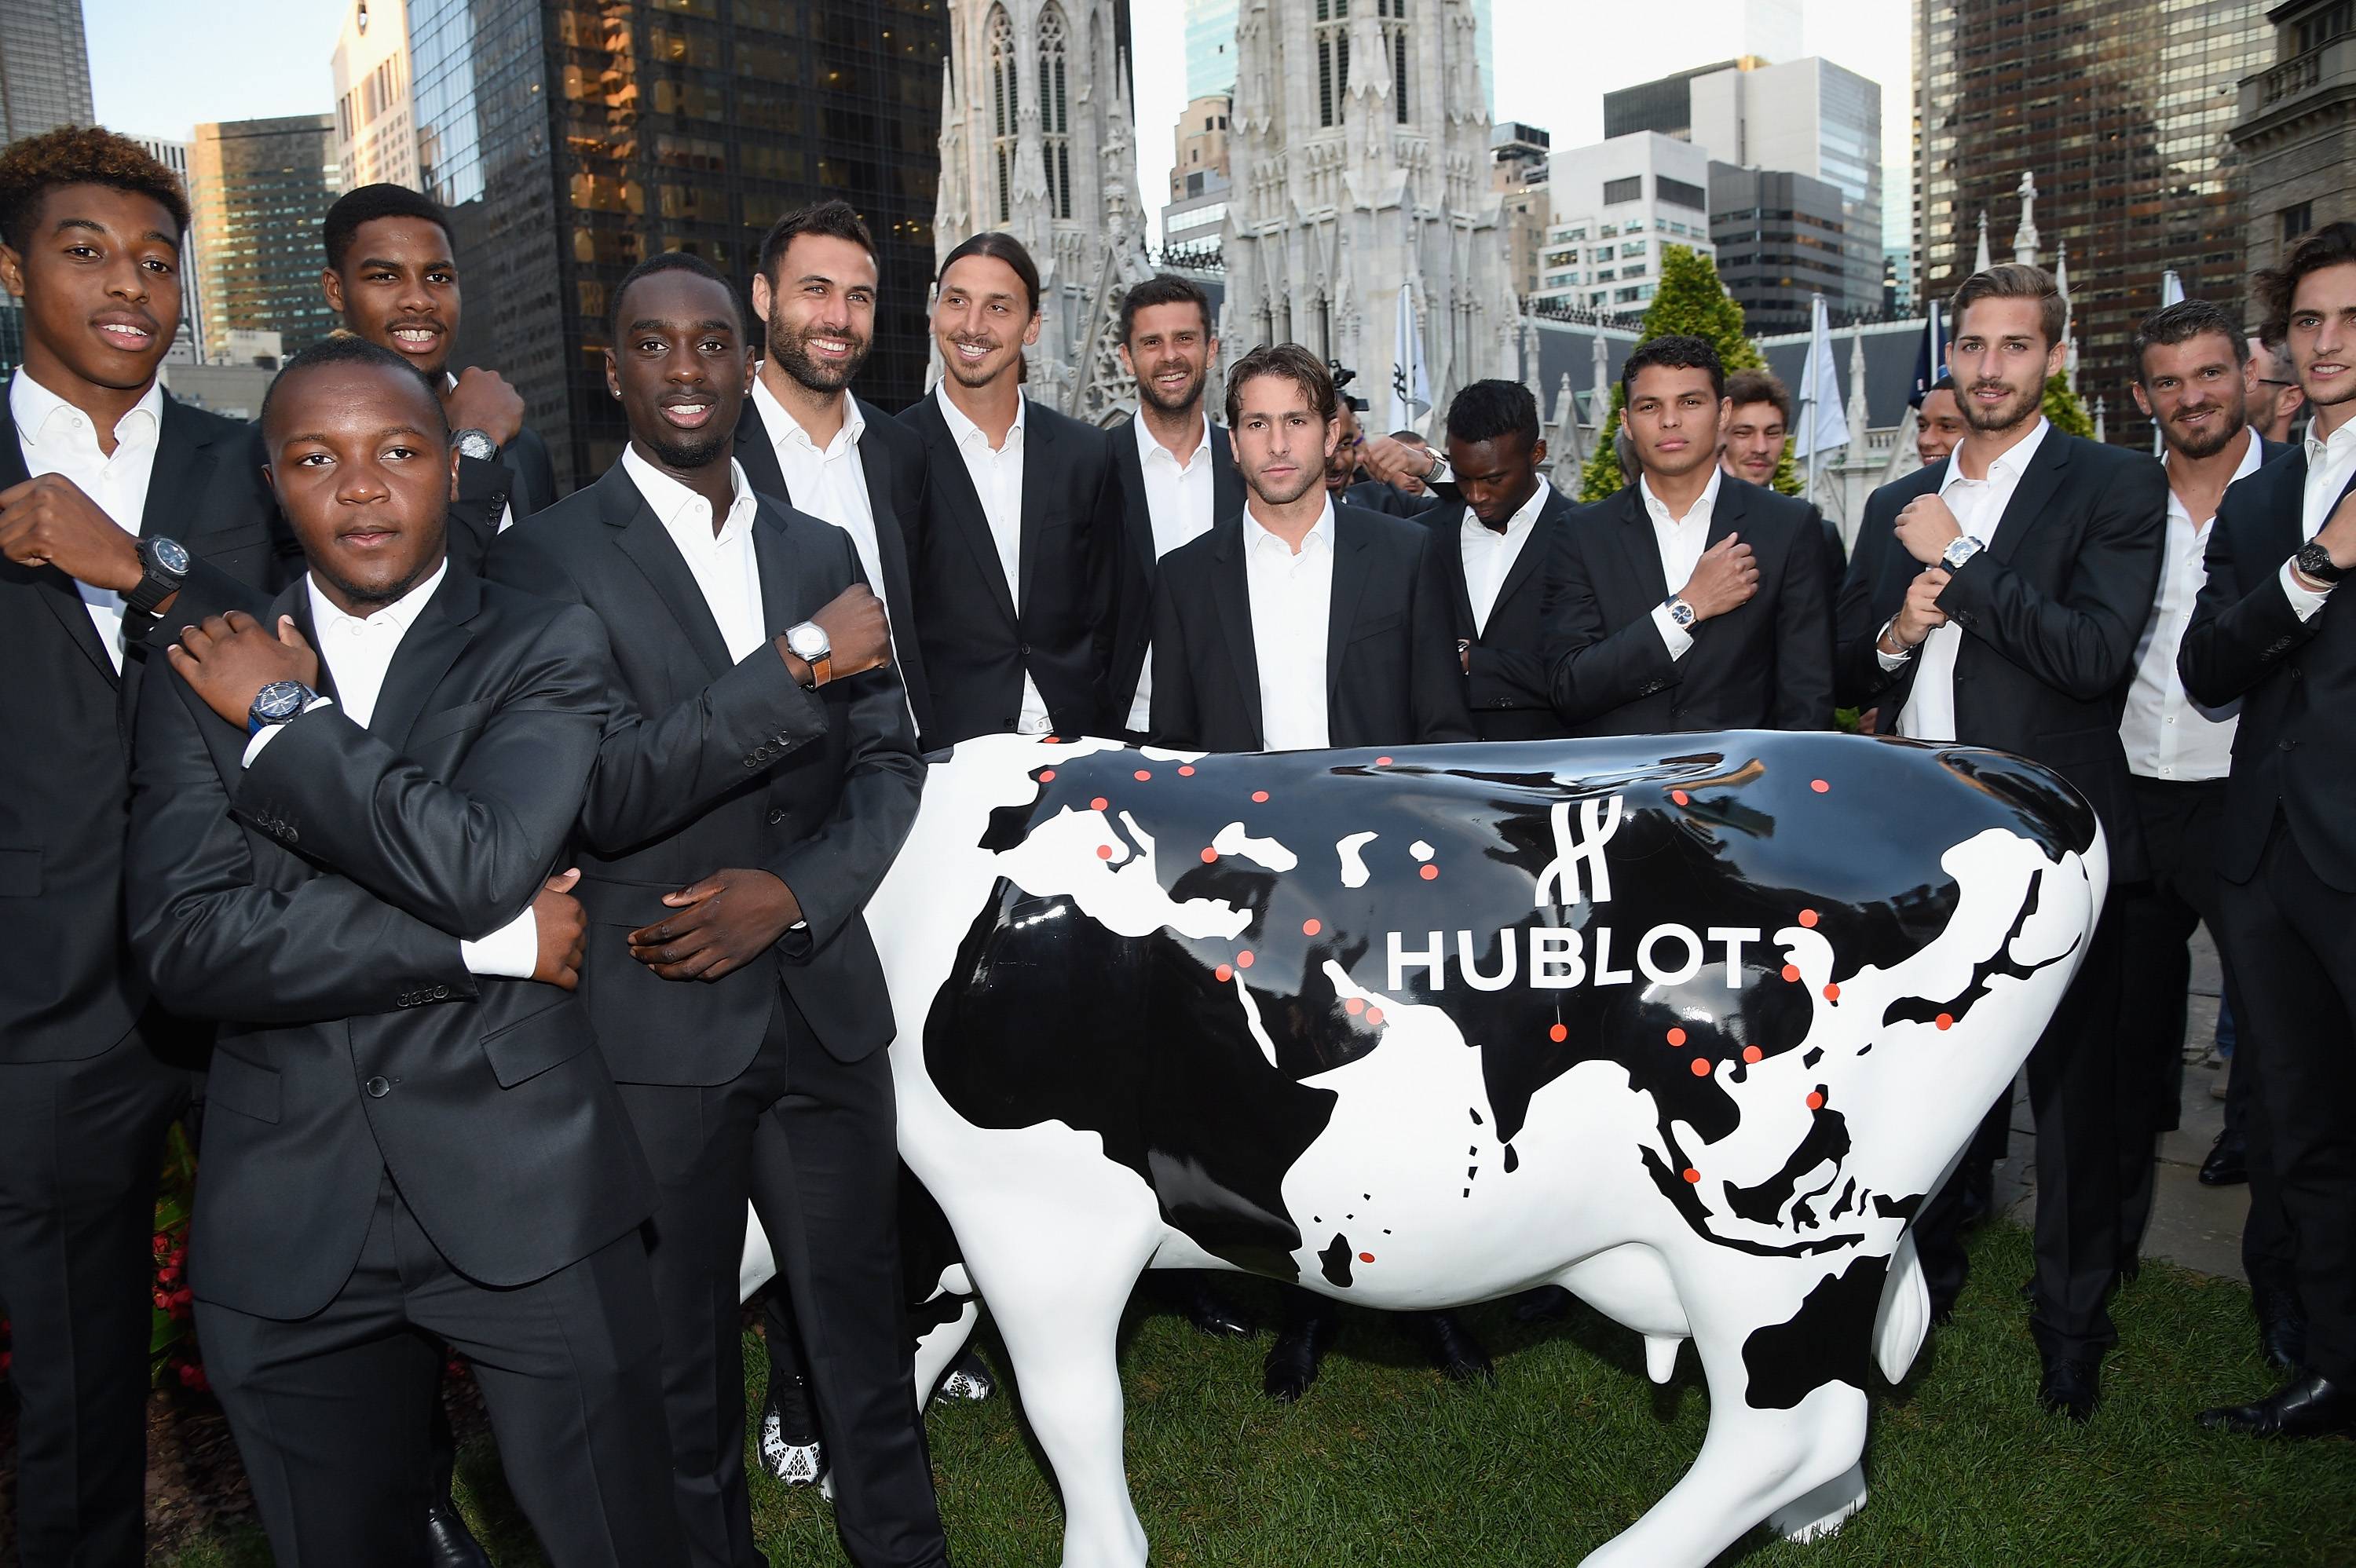 Hublot Launches Latest Timepiece With Paris Saint-Germain Team And CelebratesHublot Launches Latest Timepiece With Paris Saint-Germain Team And Celebrates Partnership In New York City Partnership In New York City